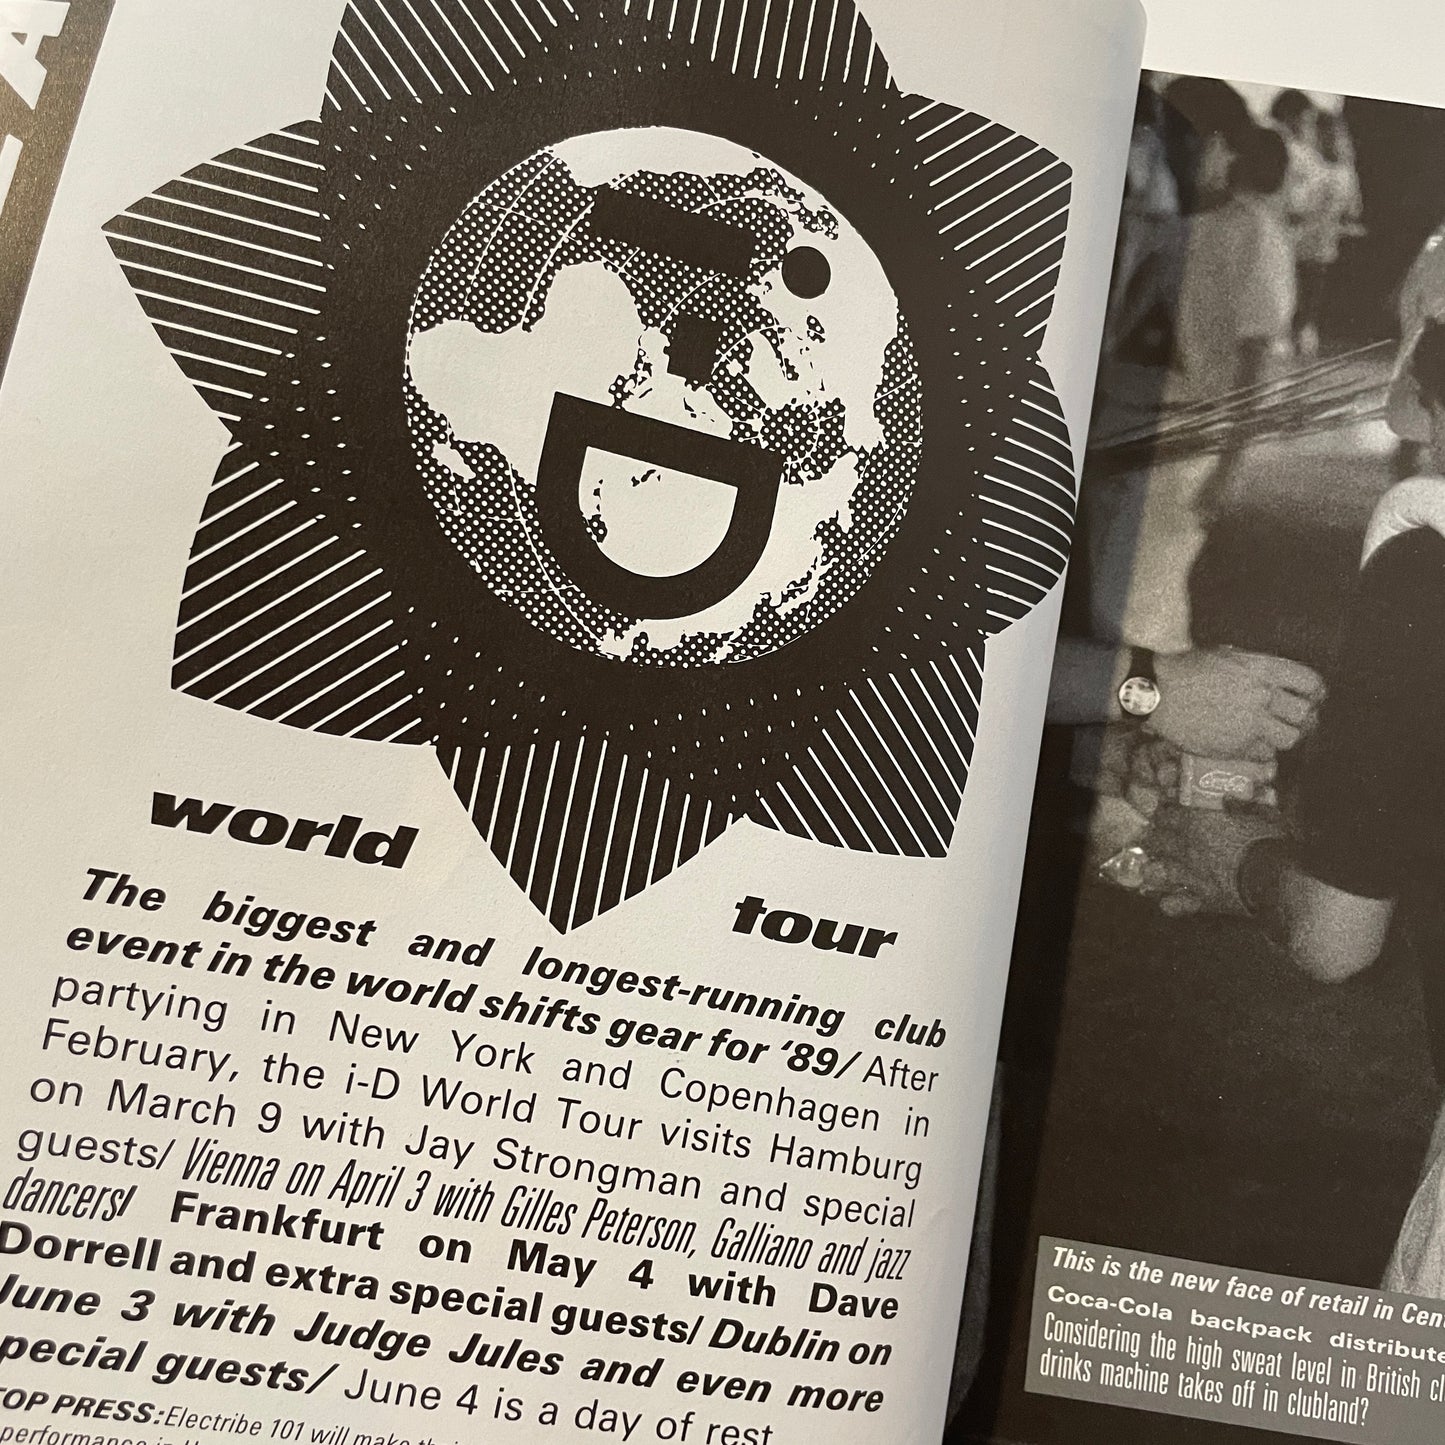 i-D Magazine No.67 1989 March